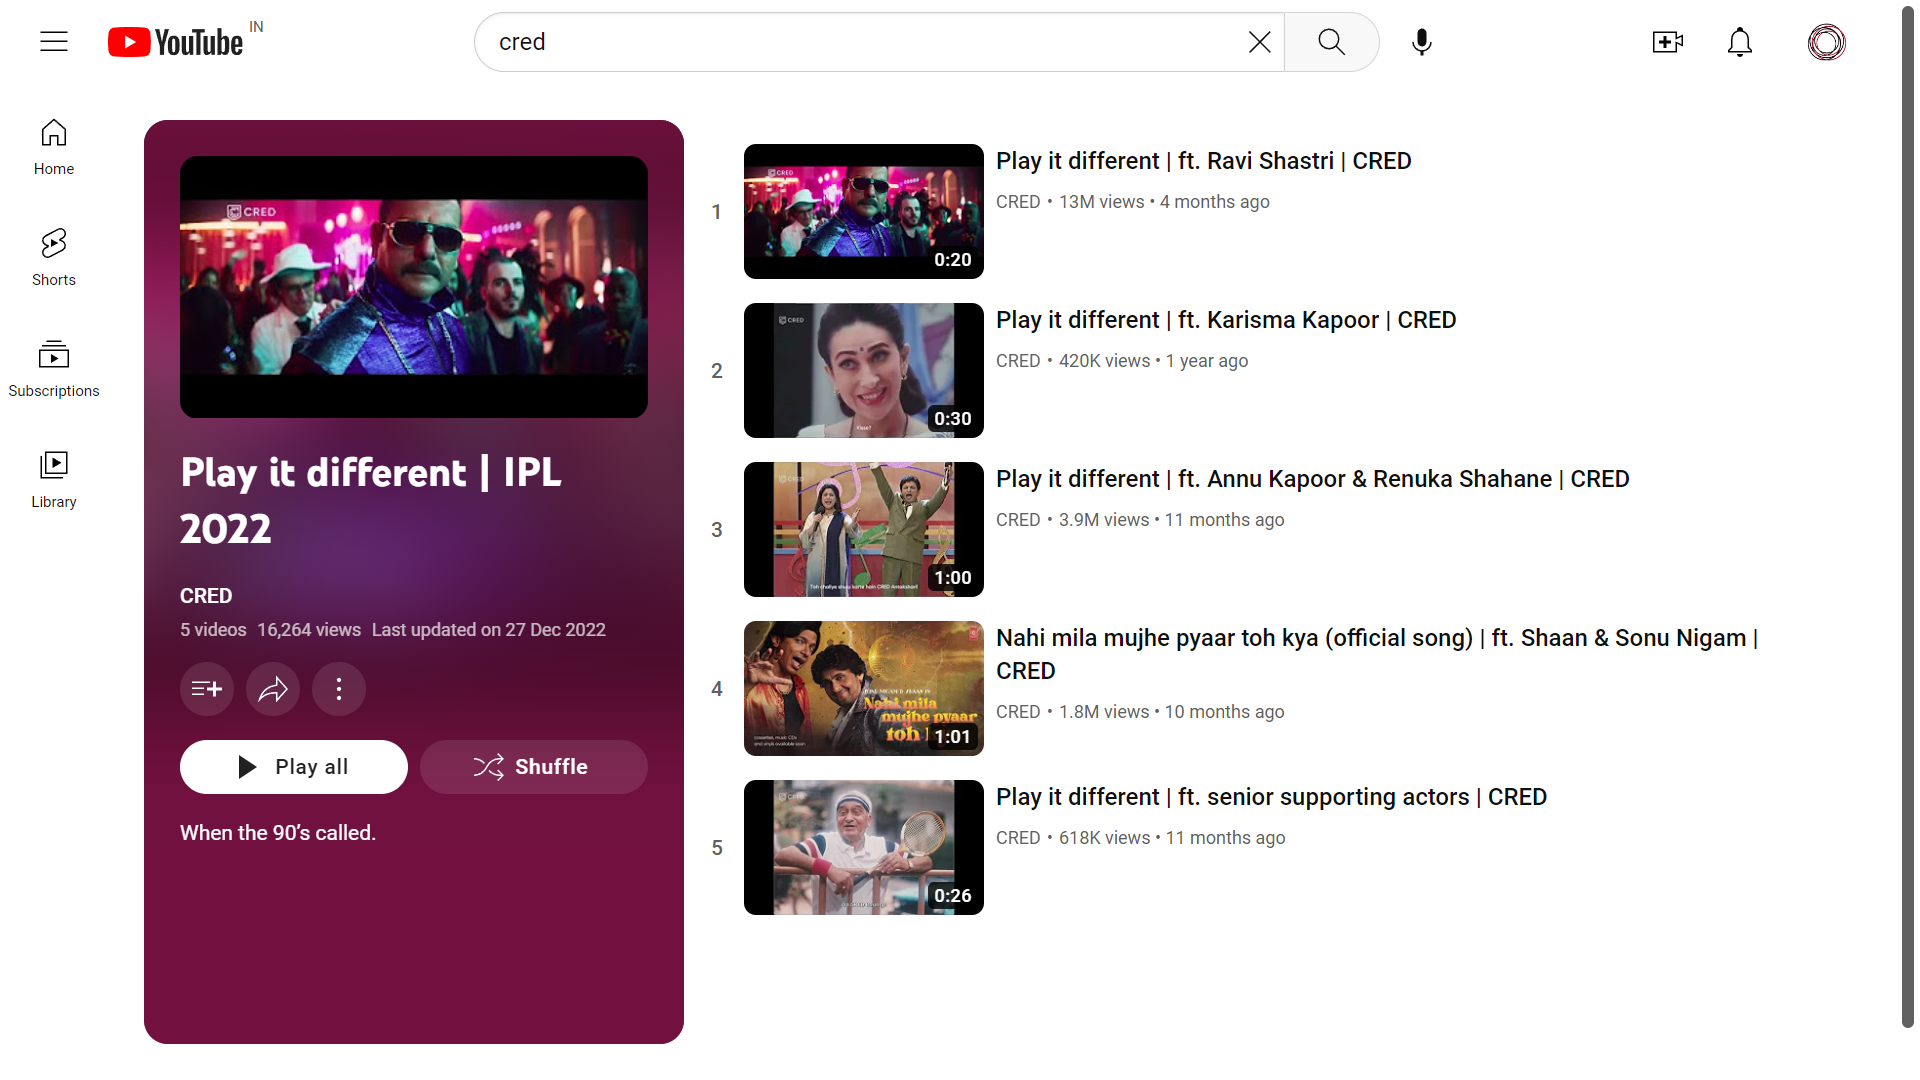 CRED IPL ads YouTube playlist screenshot